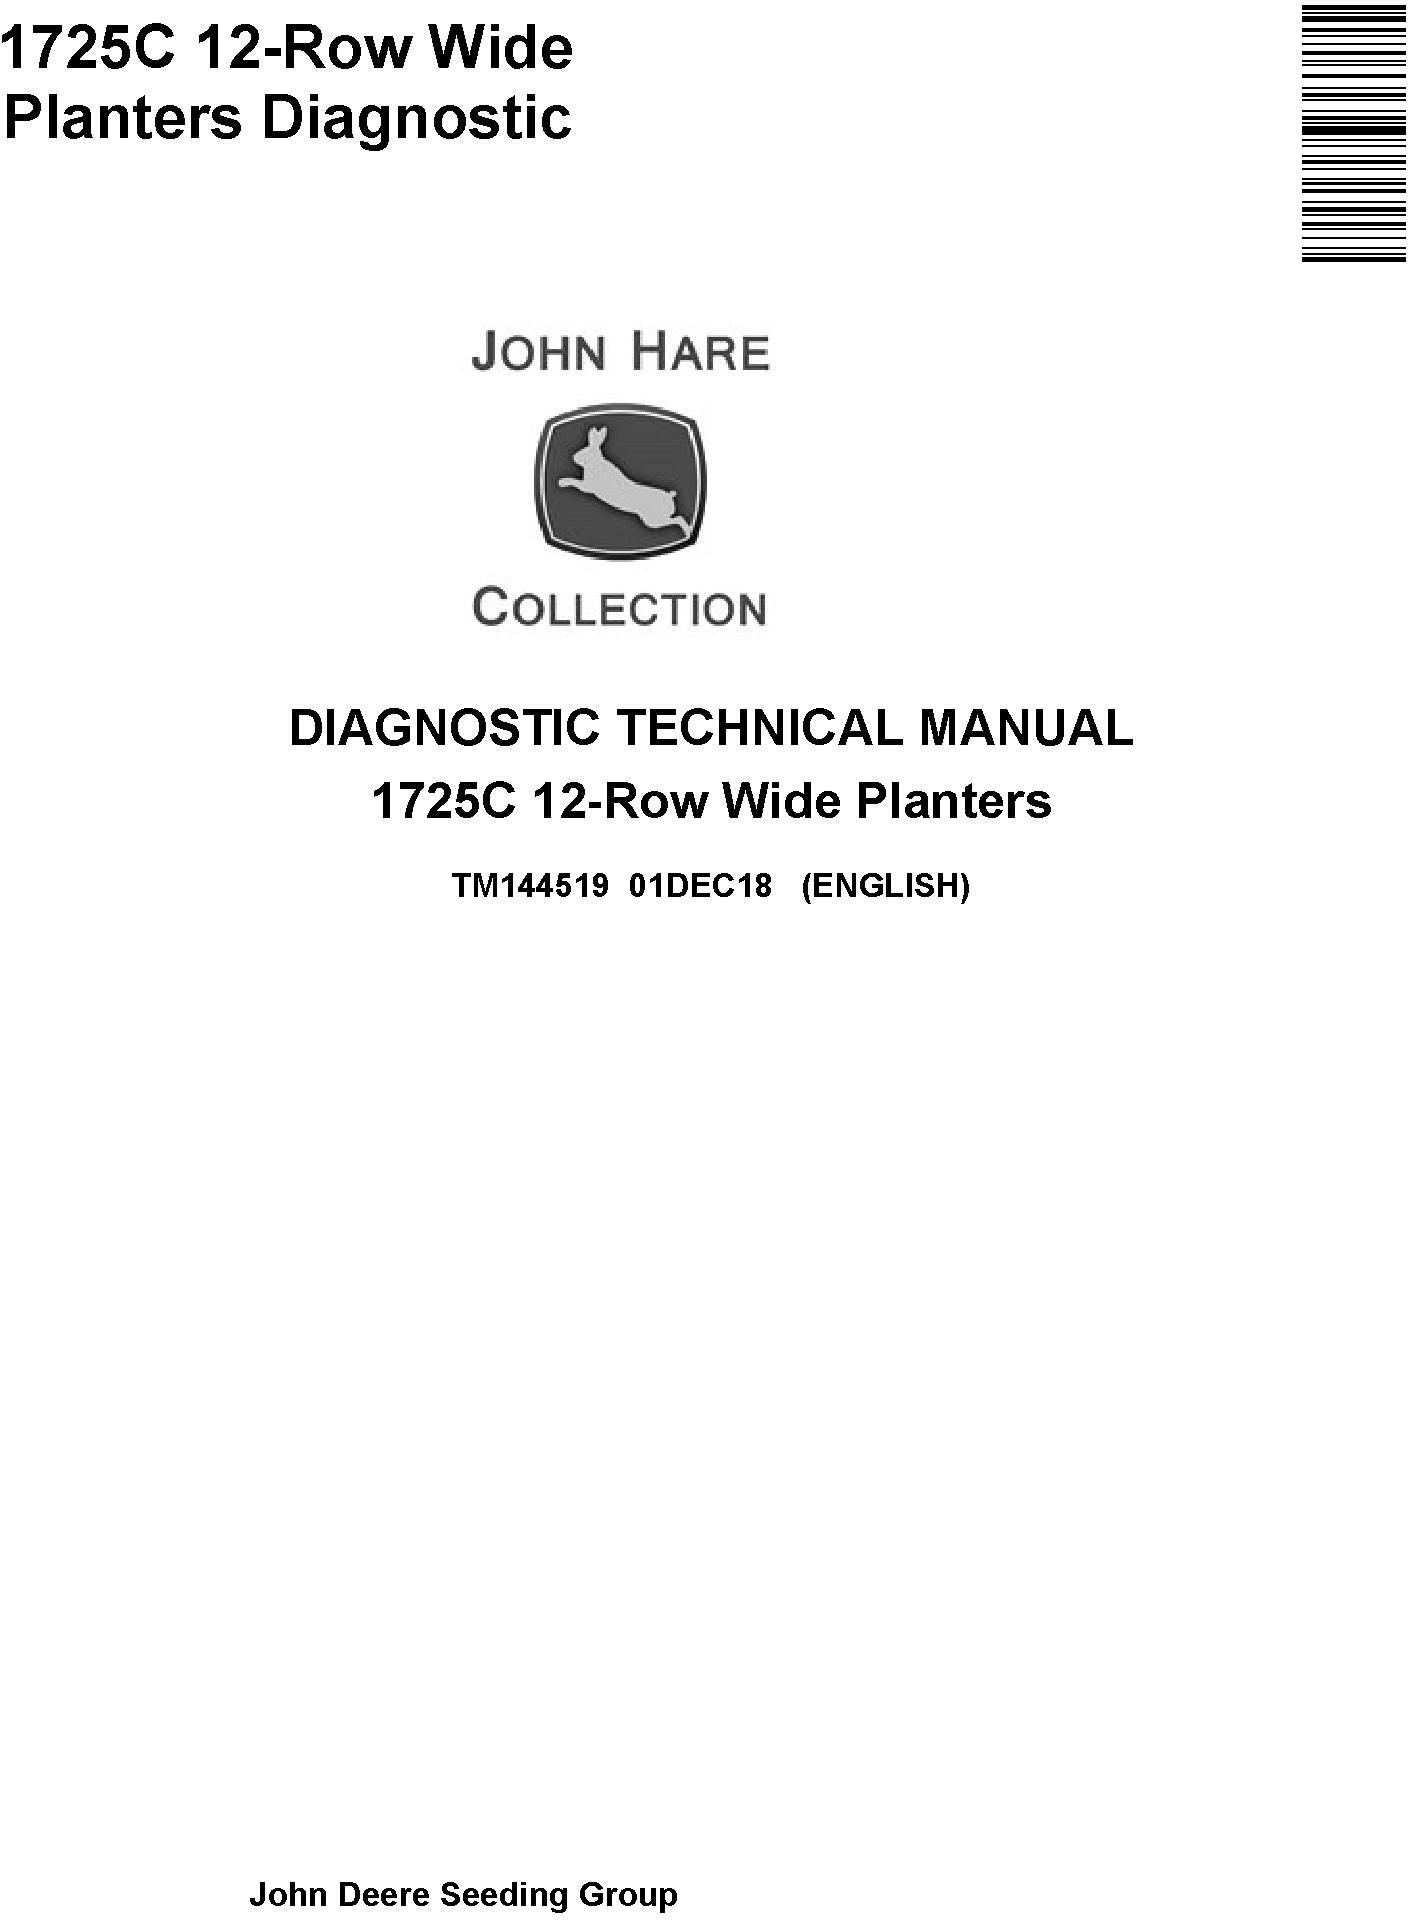 John Deere 1725C 12-Row Wide Planters Diagnostic Technical Service Manual (TM144519) - 19268